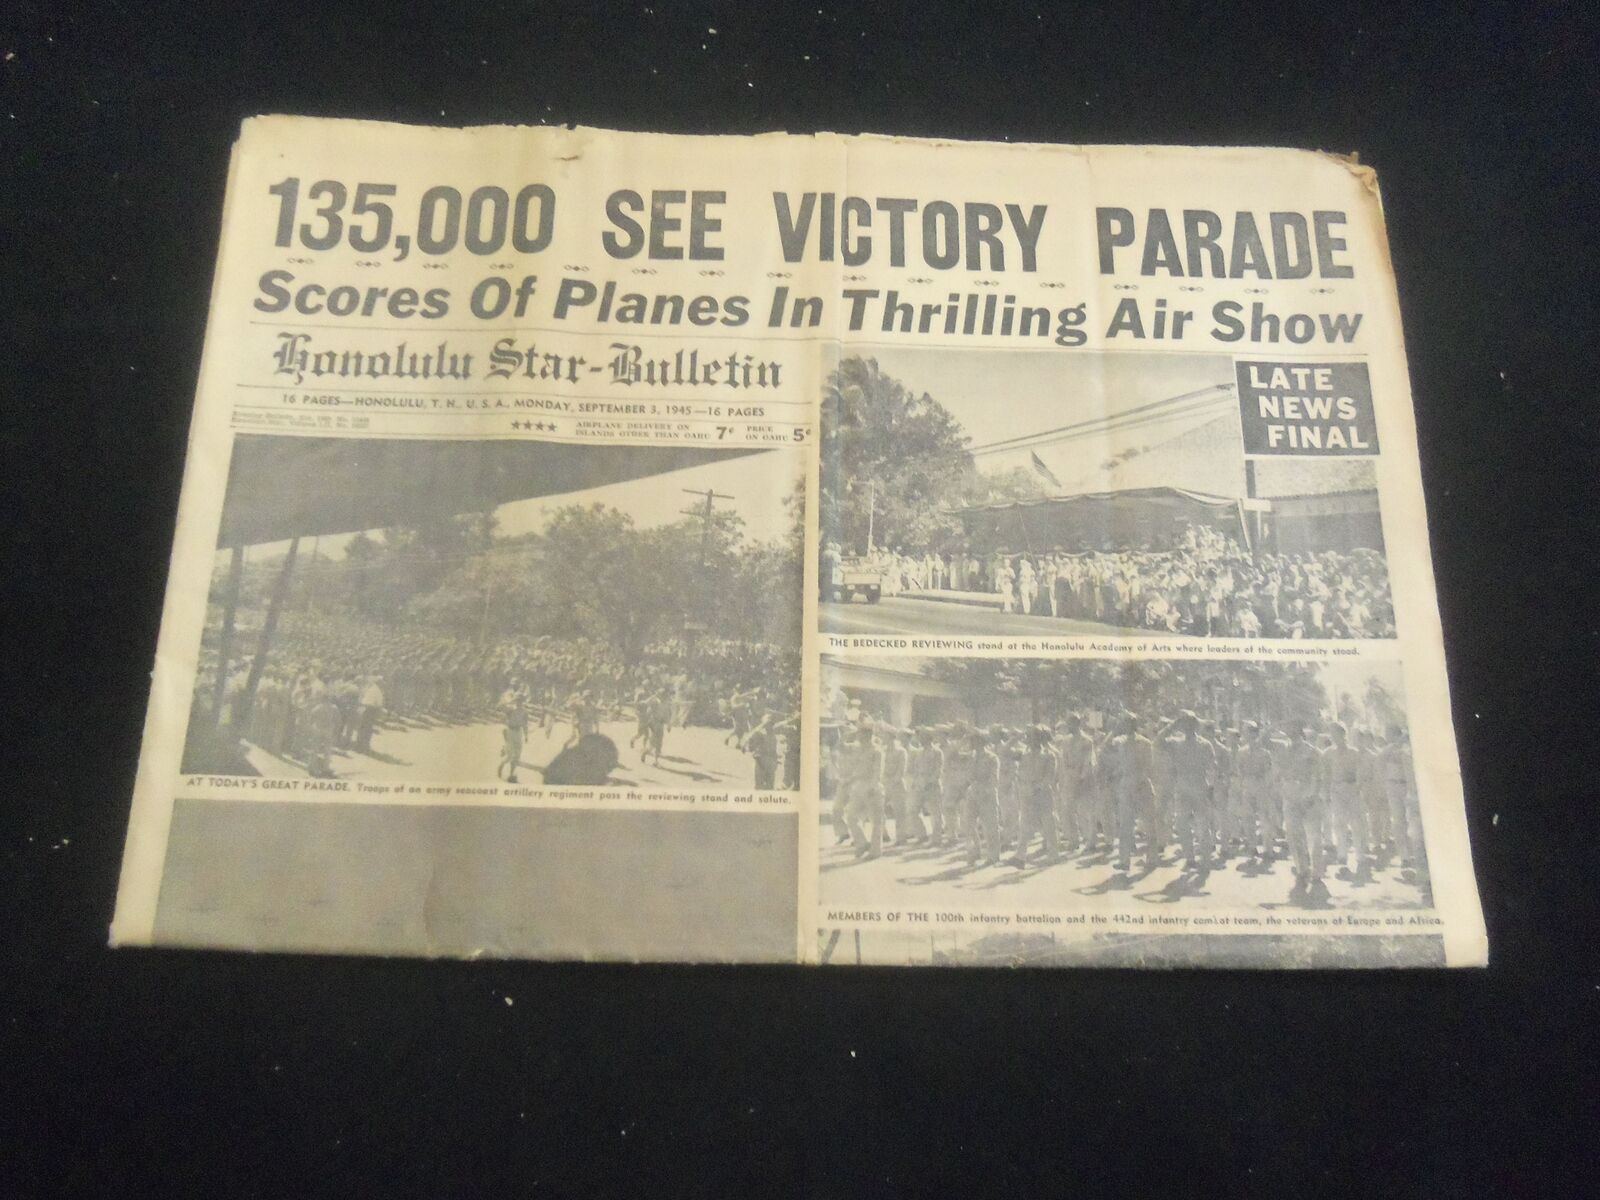 1945 SEP 3 HONOLULU STAR-BULLETIN NEWSPAPER -135,000 SEE VICTORY PARADE- NP 5728